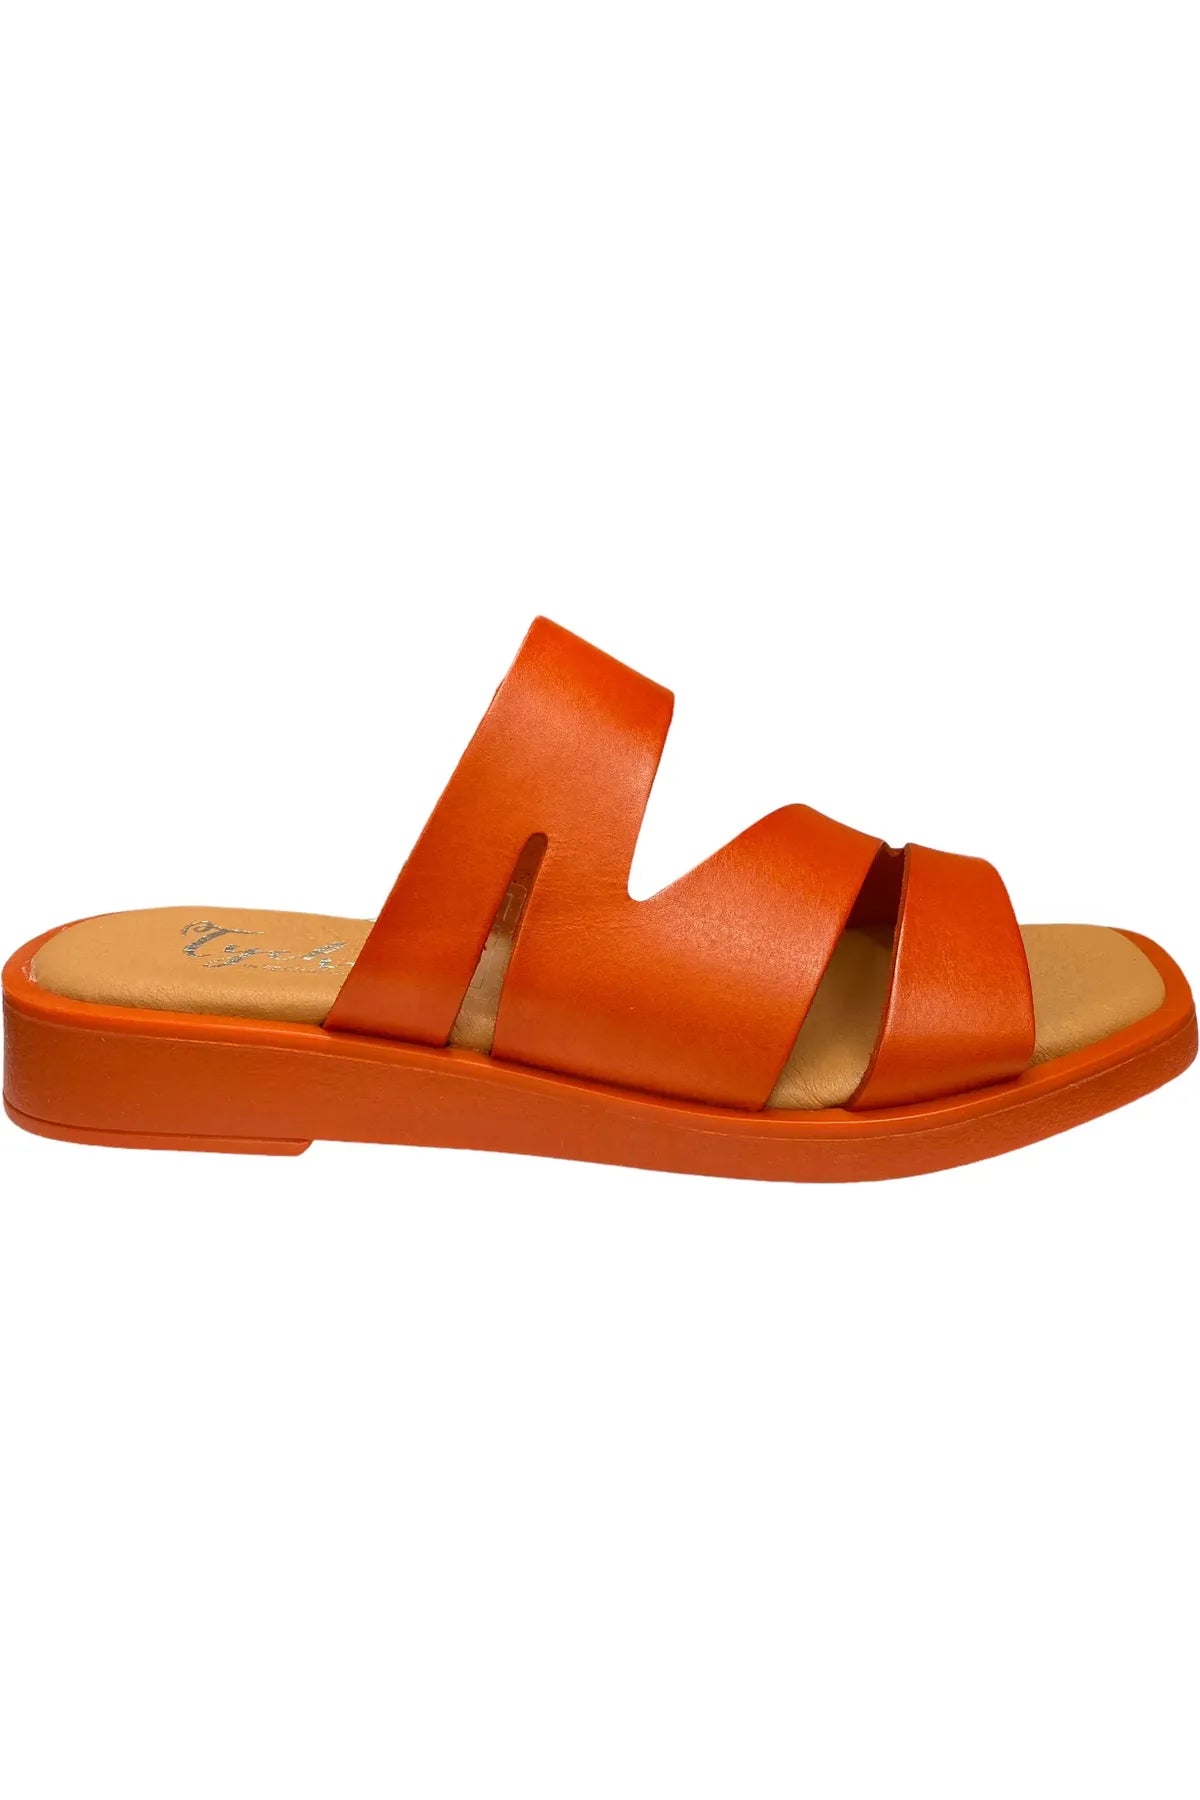 Caslon Women's Antonella Orange Leather Platform Flip Flop Sandals Size 7.5  NWT